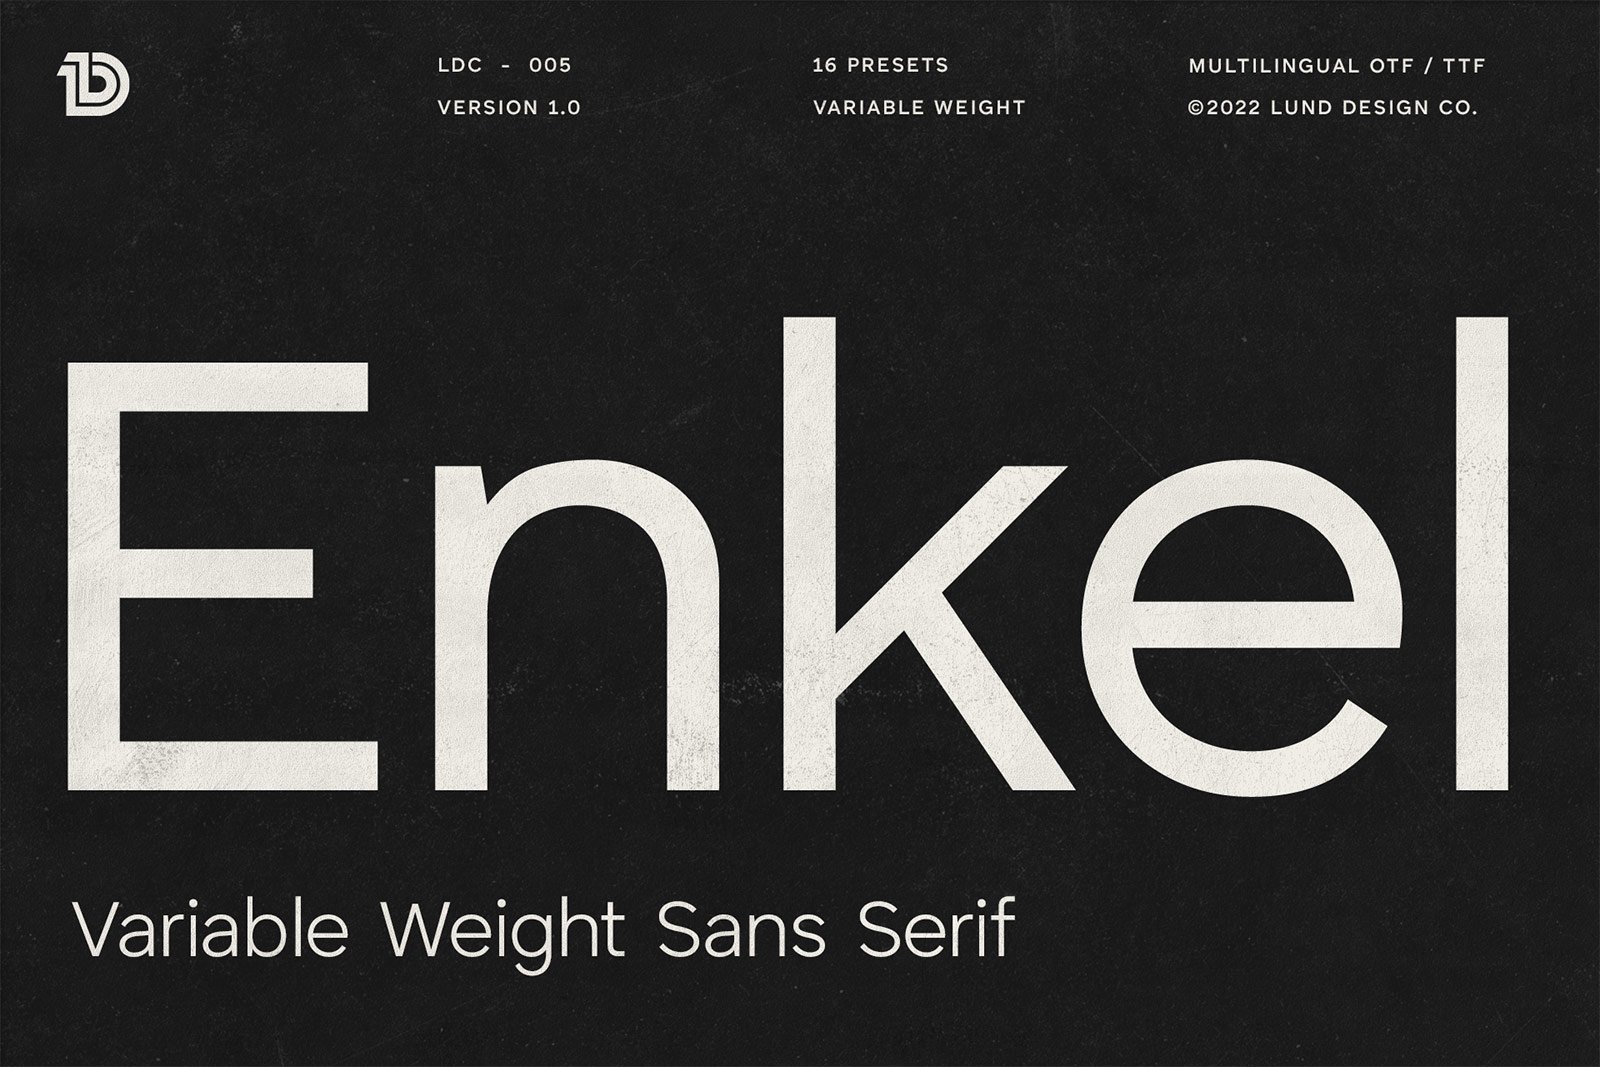 ENKEL Variable Sans Serif cover image.